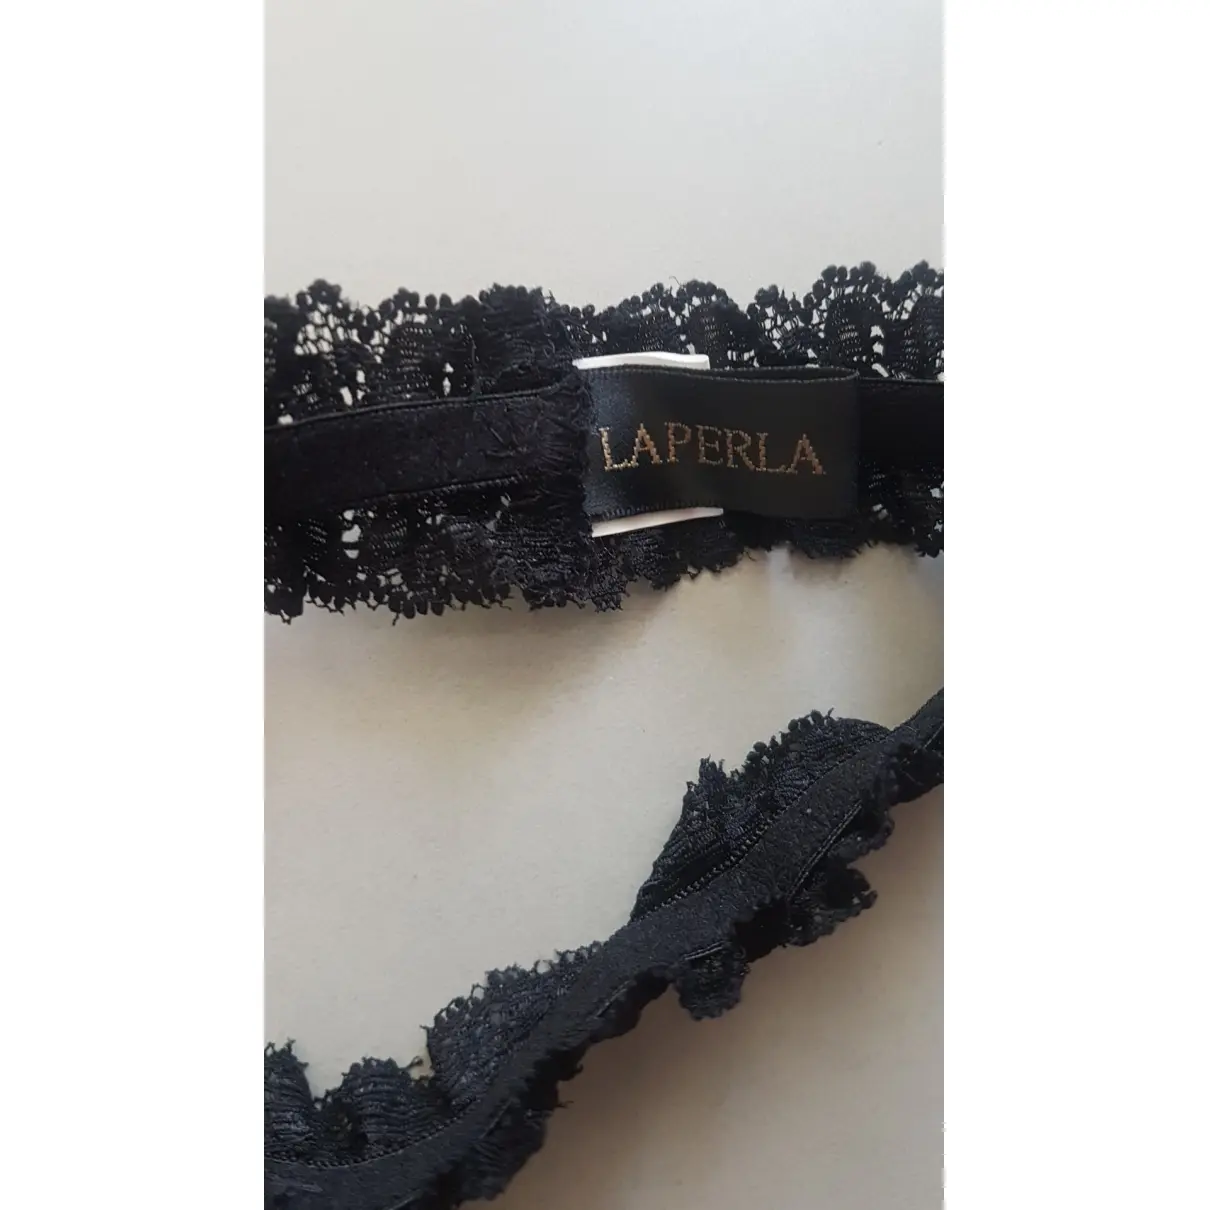 Buy La Perla Lingerie online